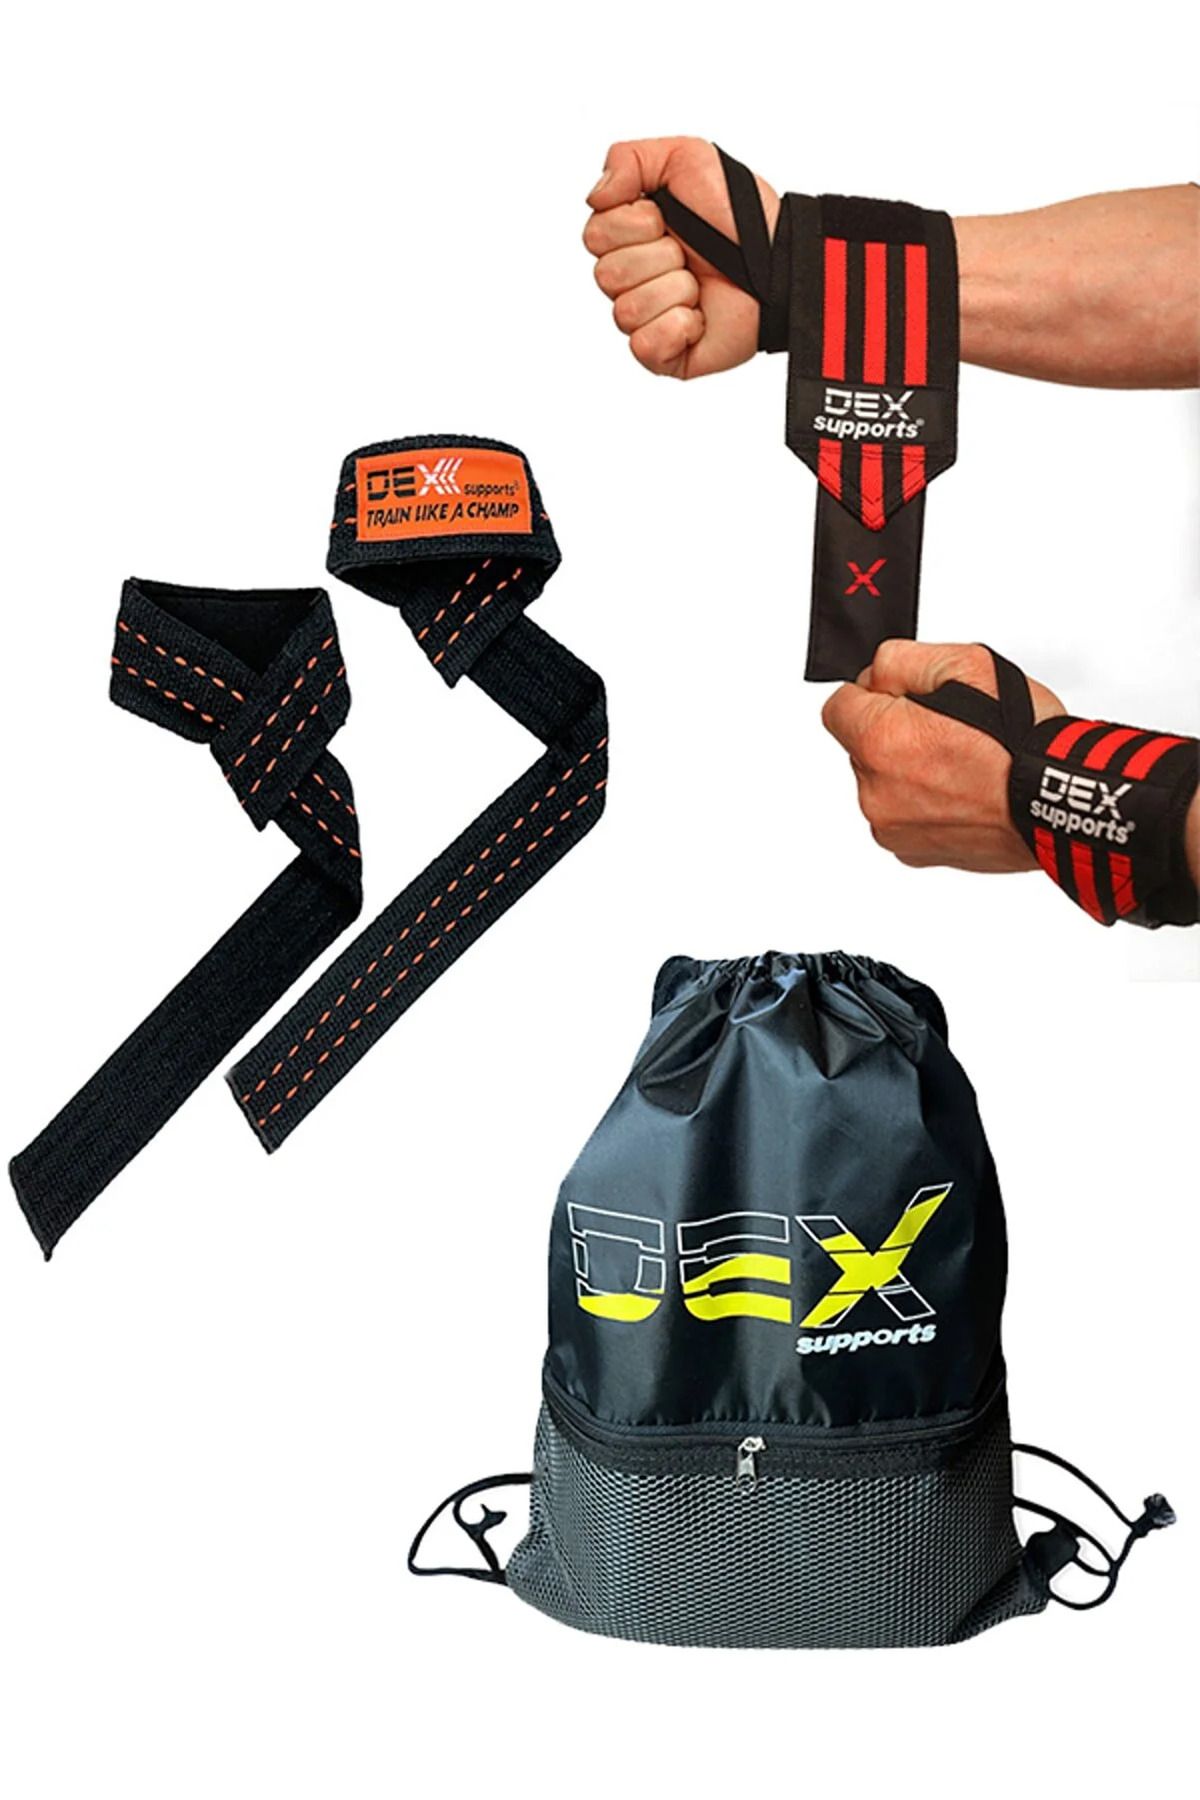 Dex Supports Lasting Energy Fitness Sporcu Aksesuar Seti Wrist Wraps Pro Lifting Straps Sackpack